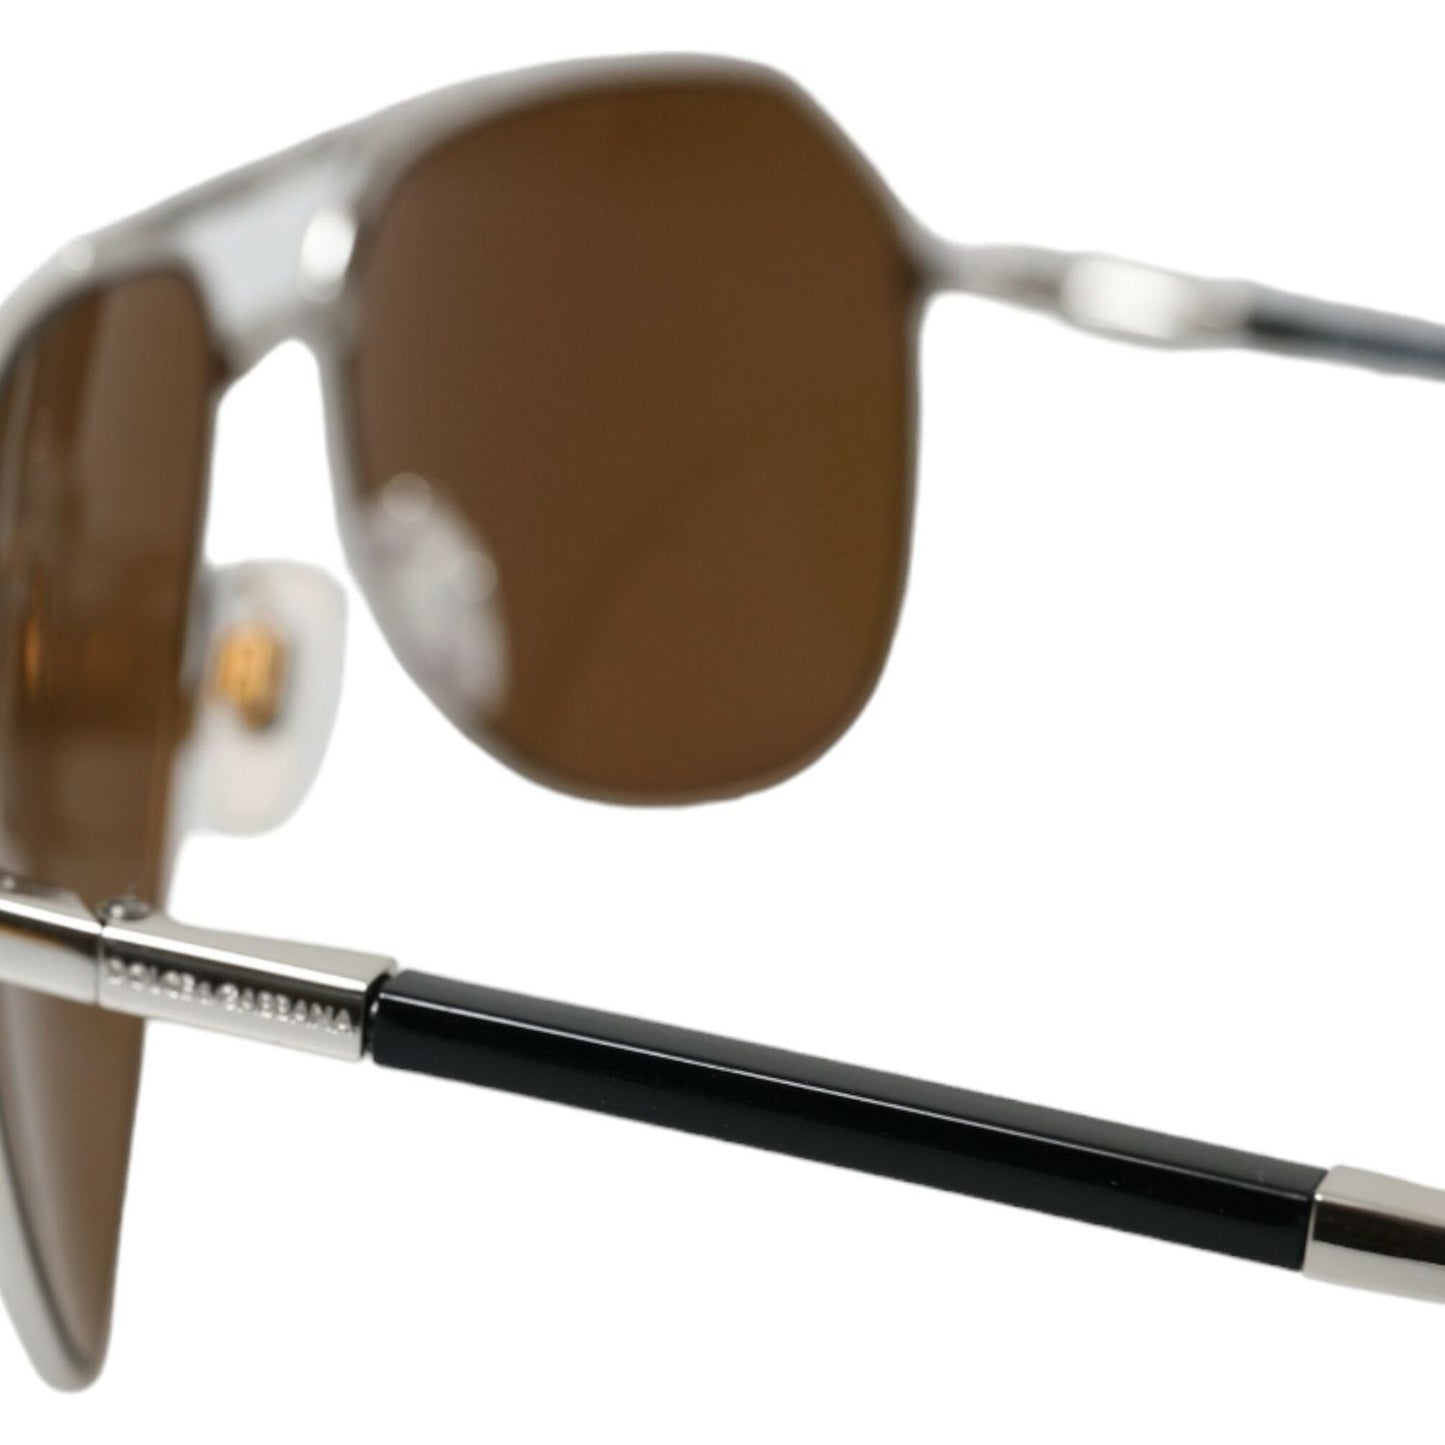 Sleek Silver Metal Sunglasses for Men